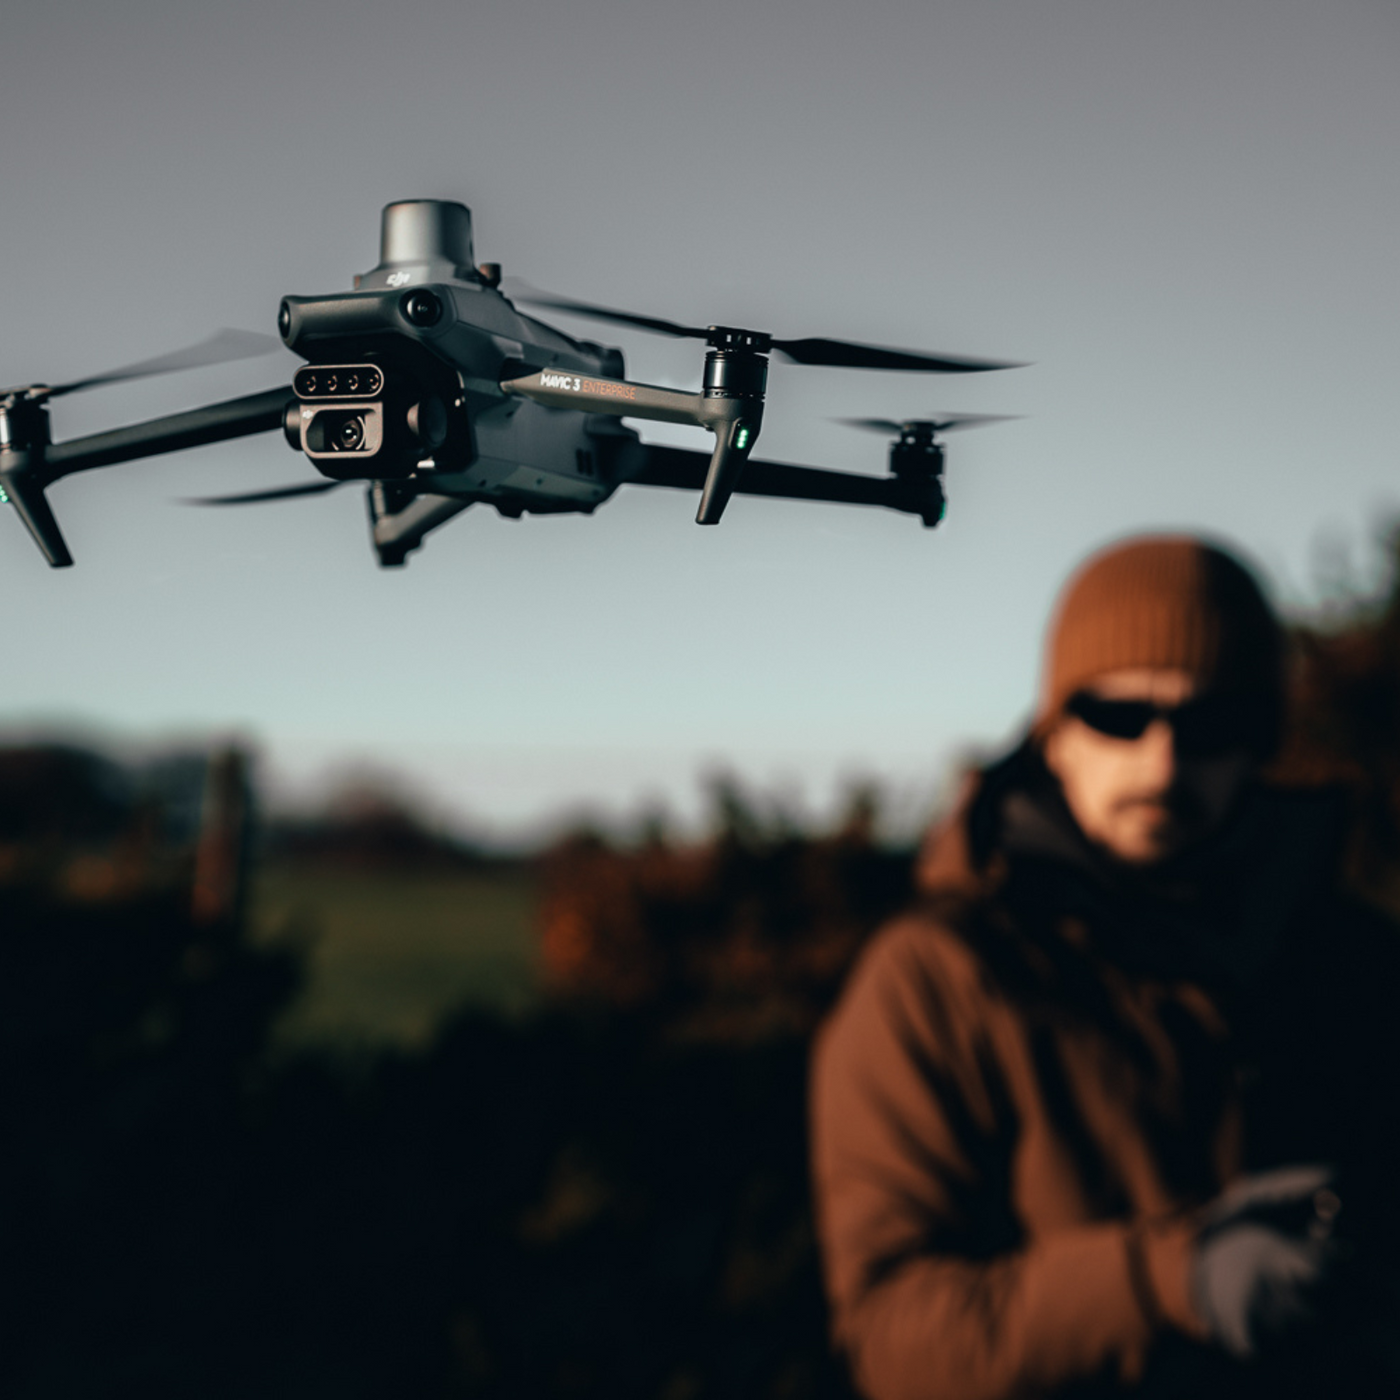 CAA Consultation On UK Drone Regulations